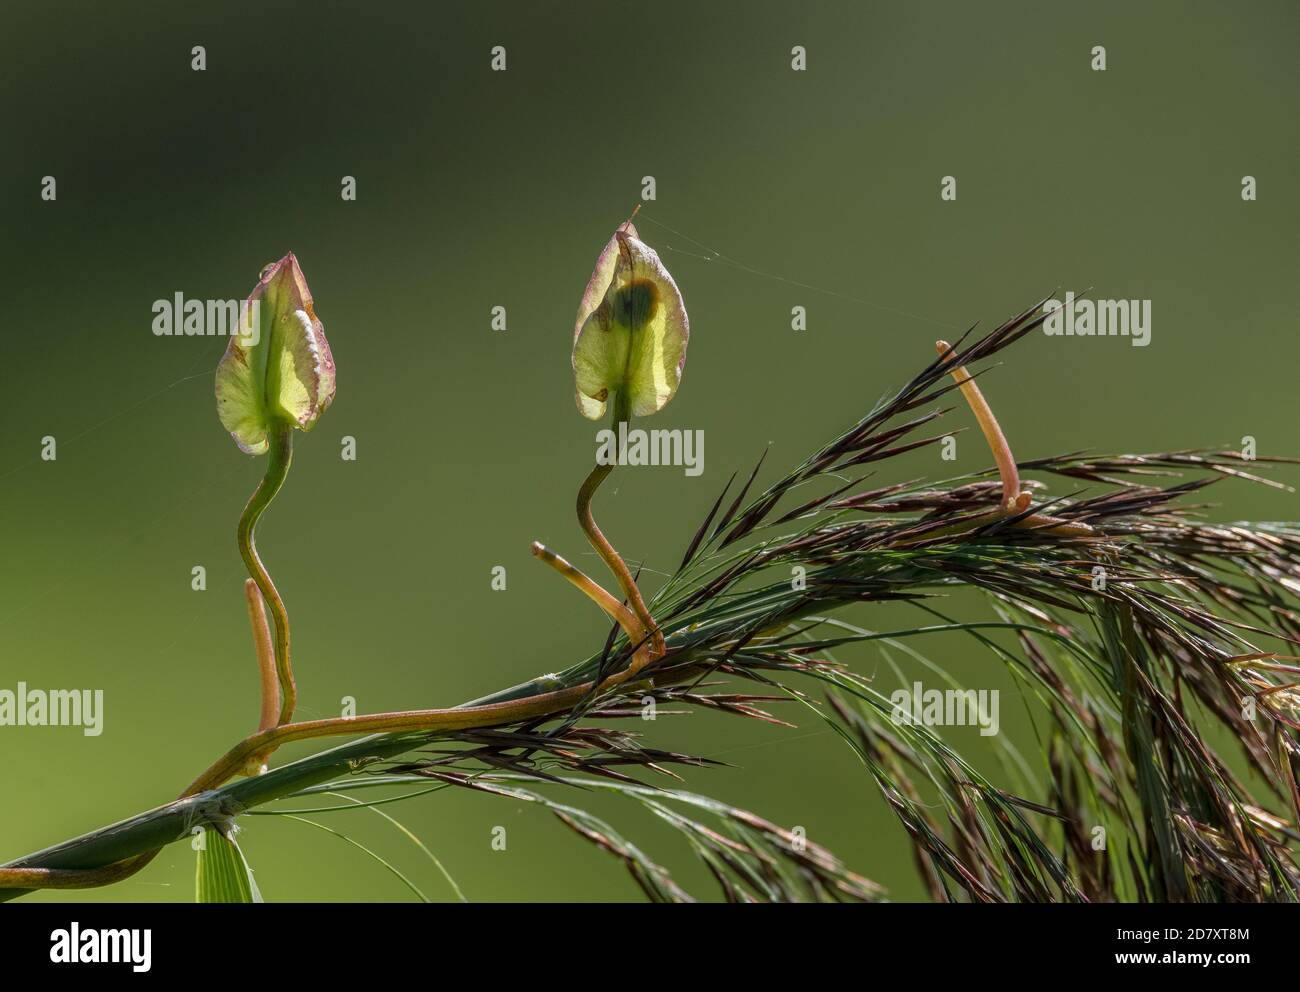 Twining stems and fruit of Hedge bindweed, Calystegia sepium, climbing up Common Reed in marshland. Stock Photo